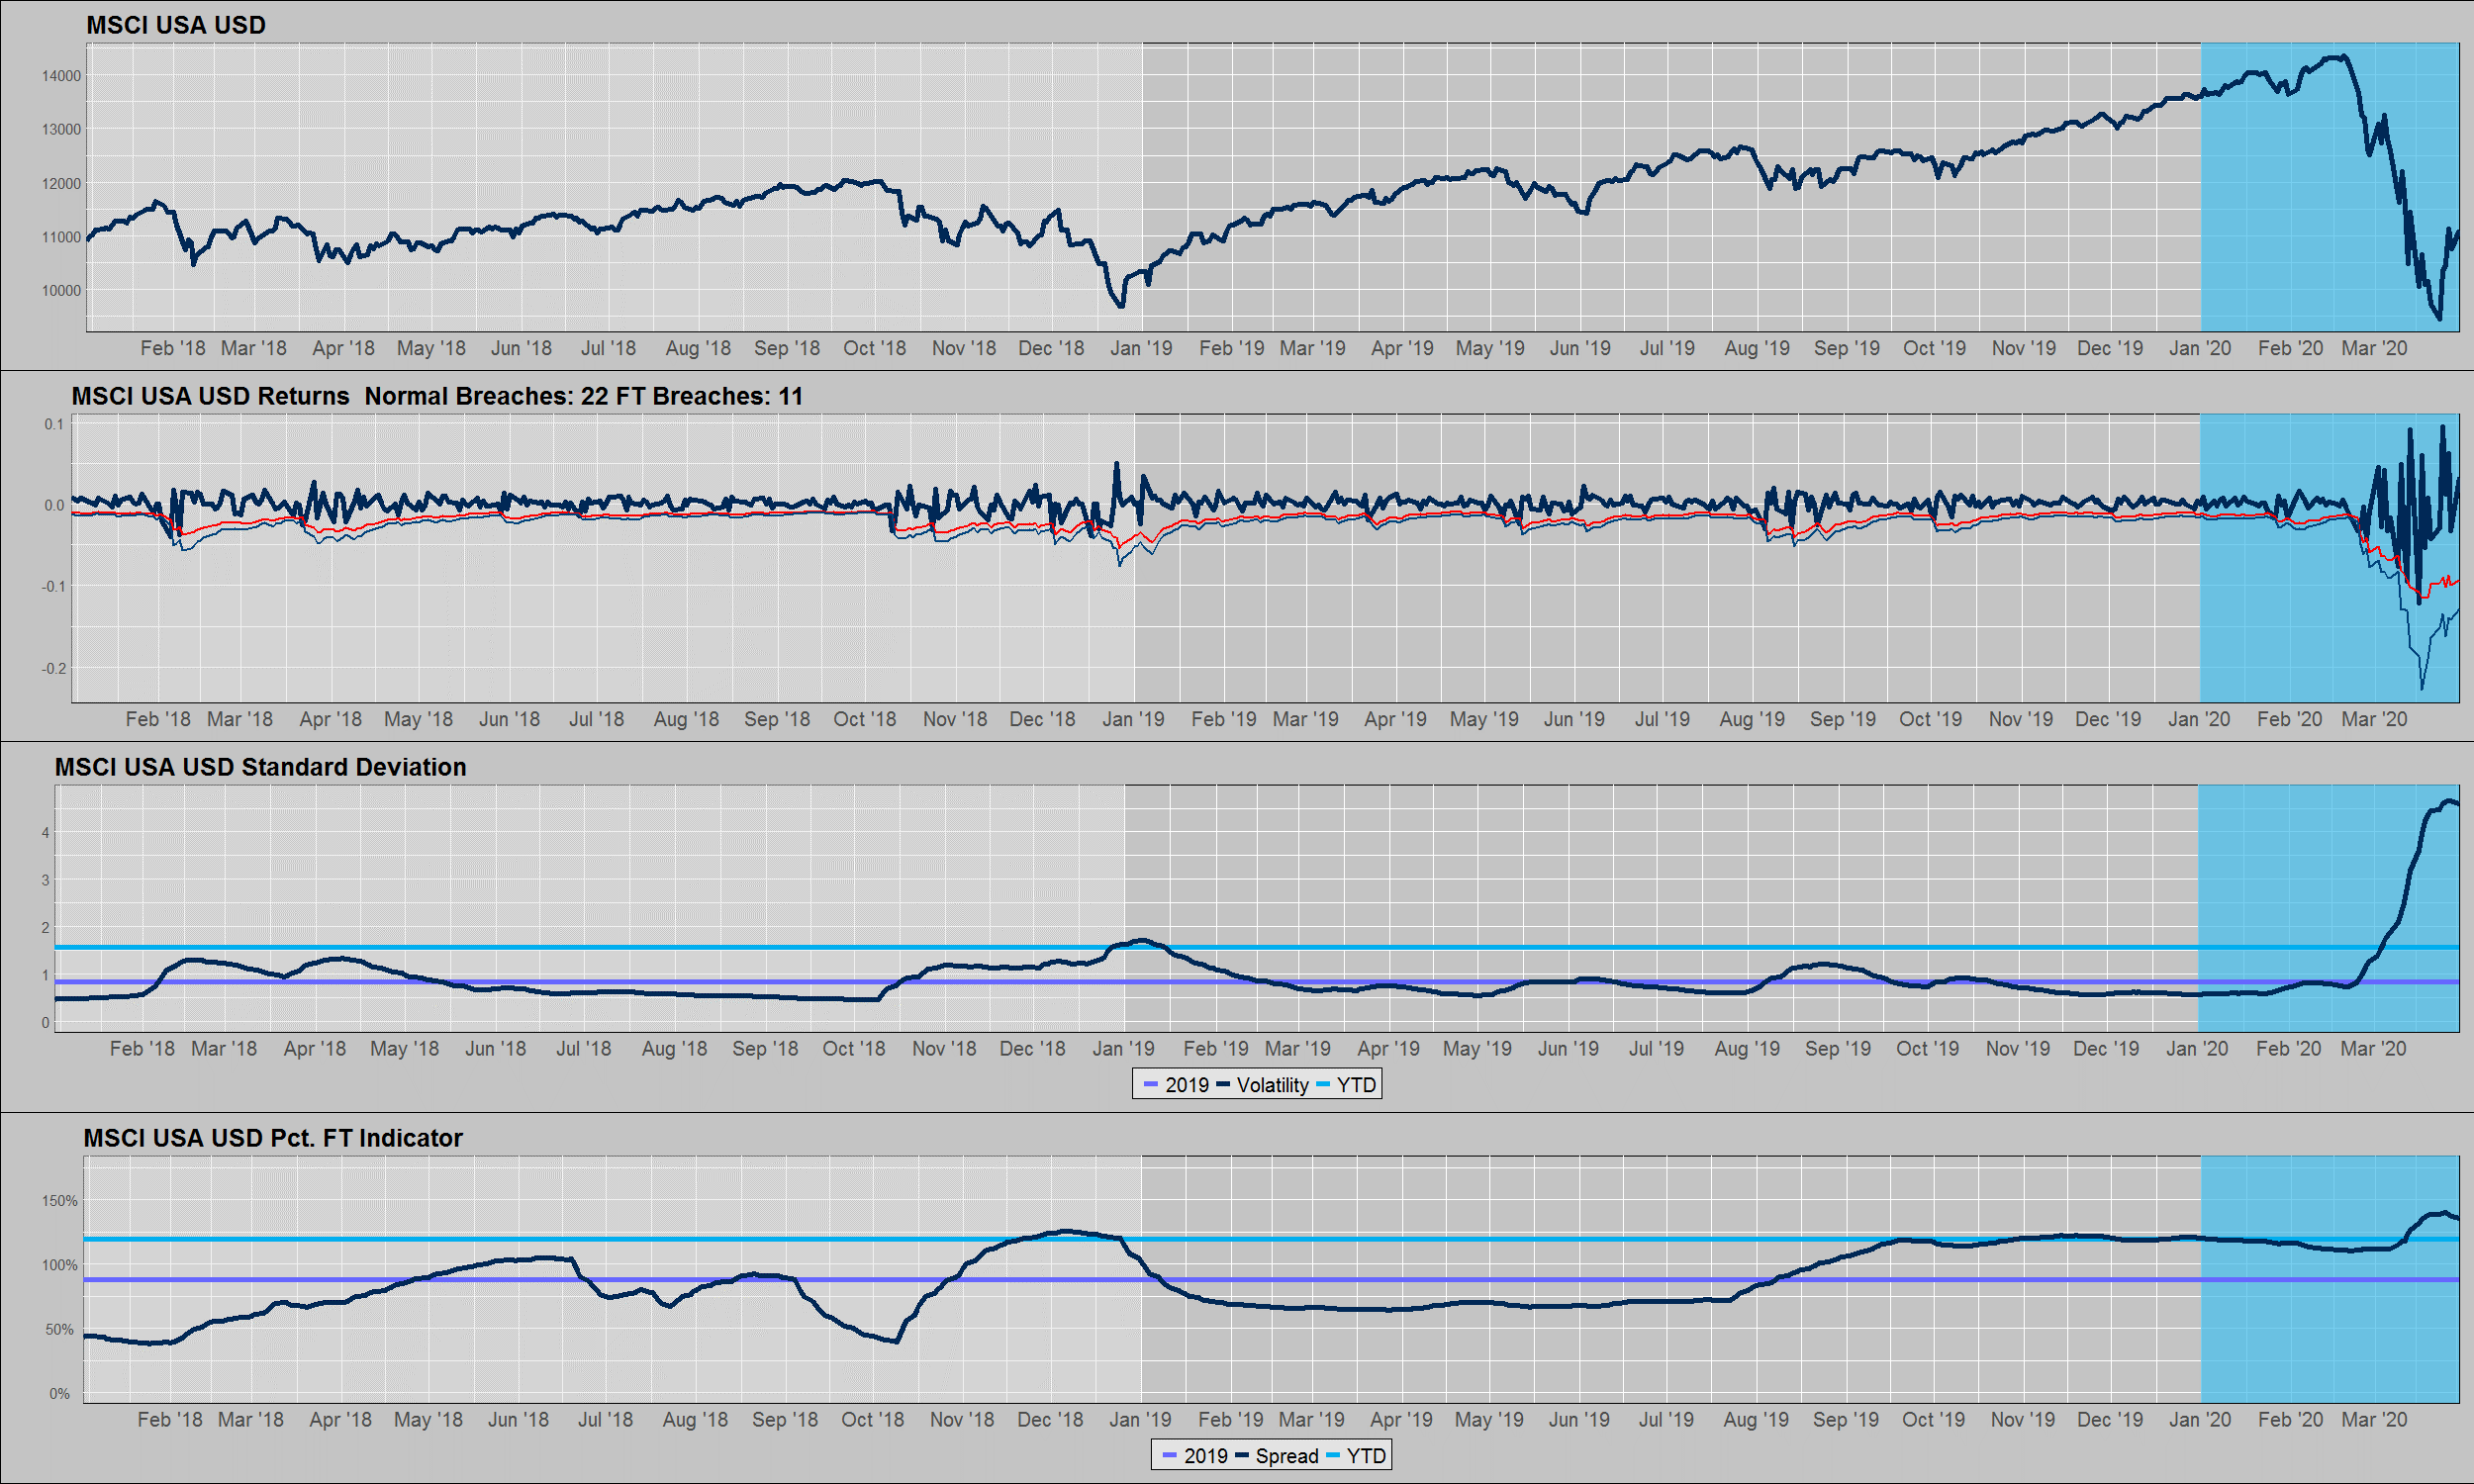 Figure 1: MSCI USA Performance, Volatility, and Fat-Tail Indicator